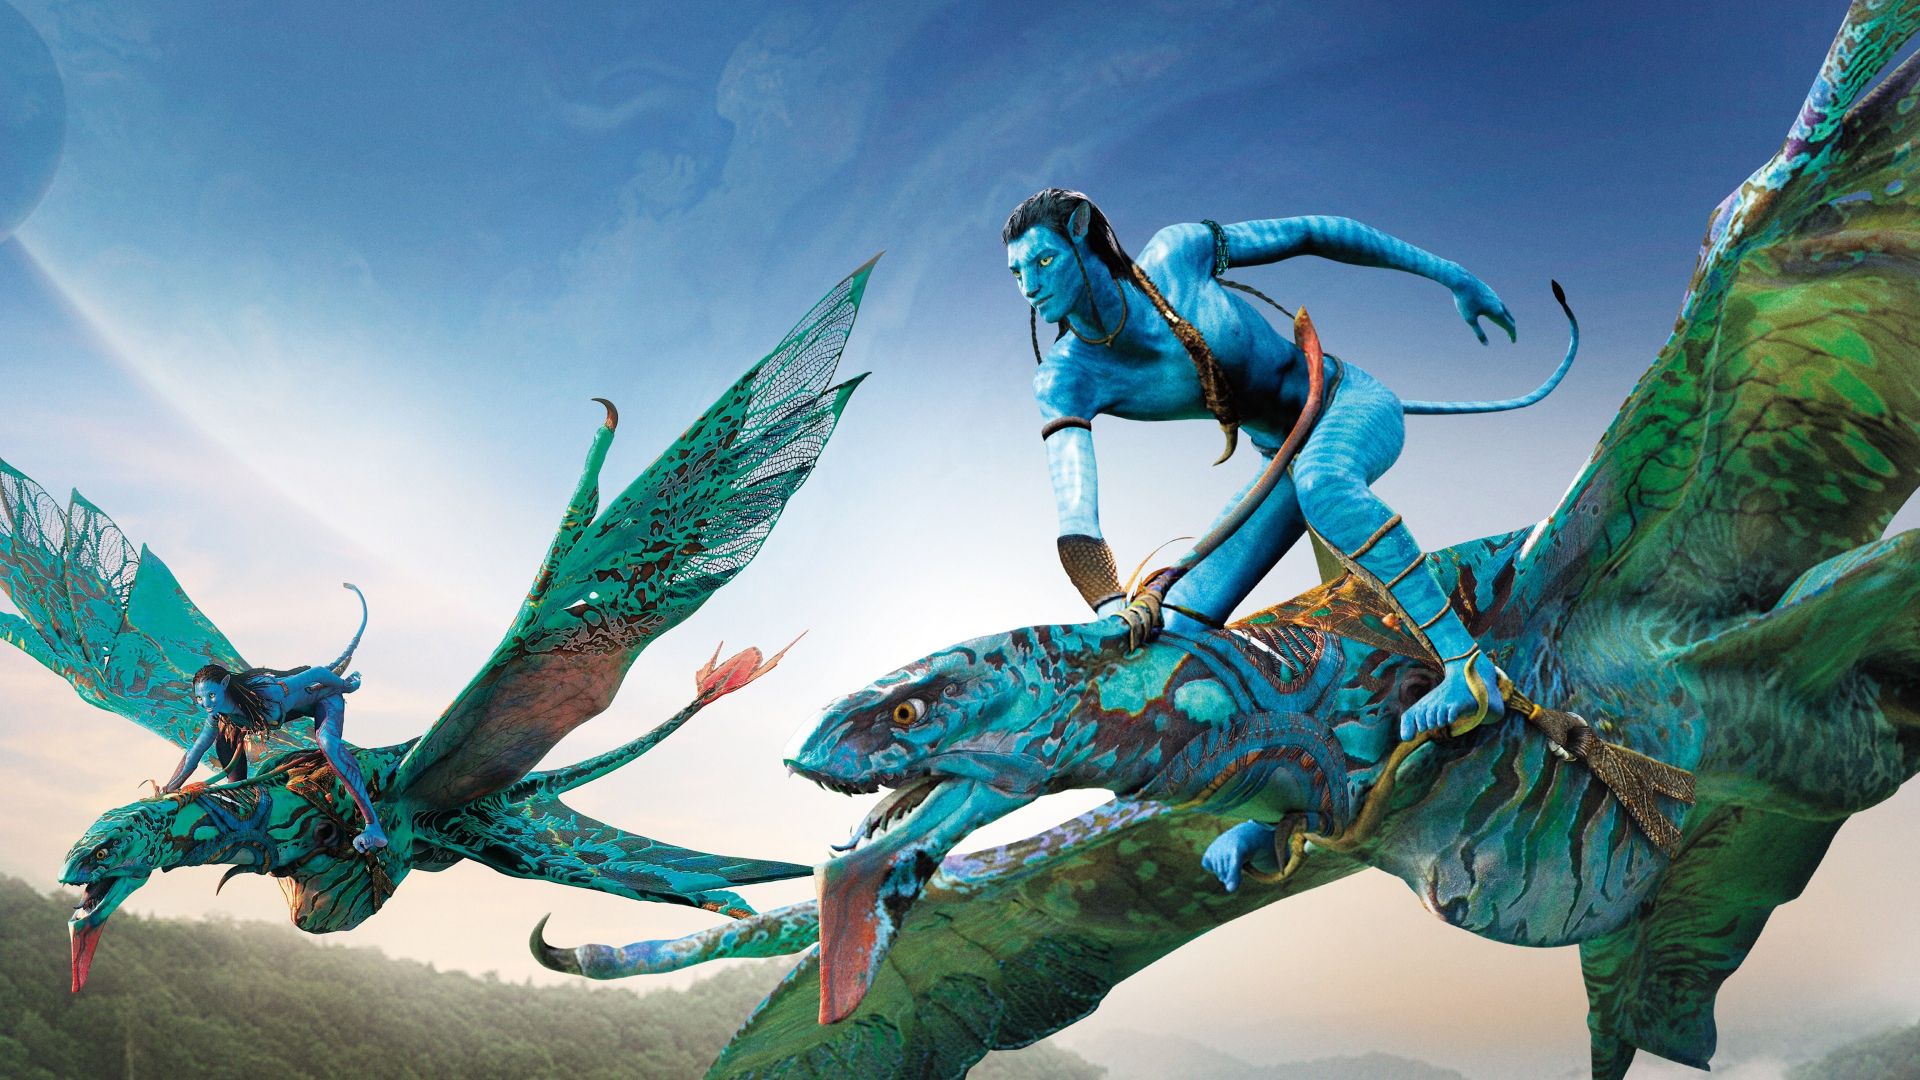 Desktop Wallpaper Avatar Movie, Hd Image, Picture, Background, 90v Xw